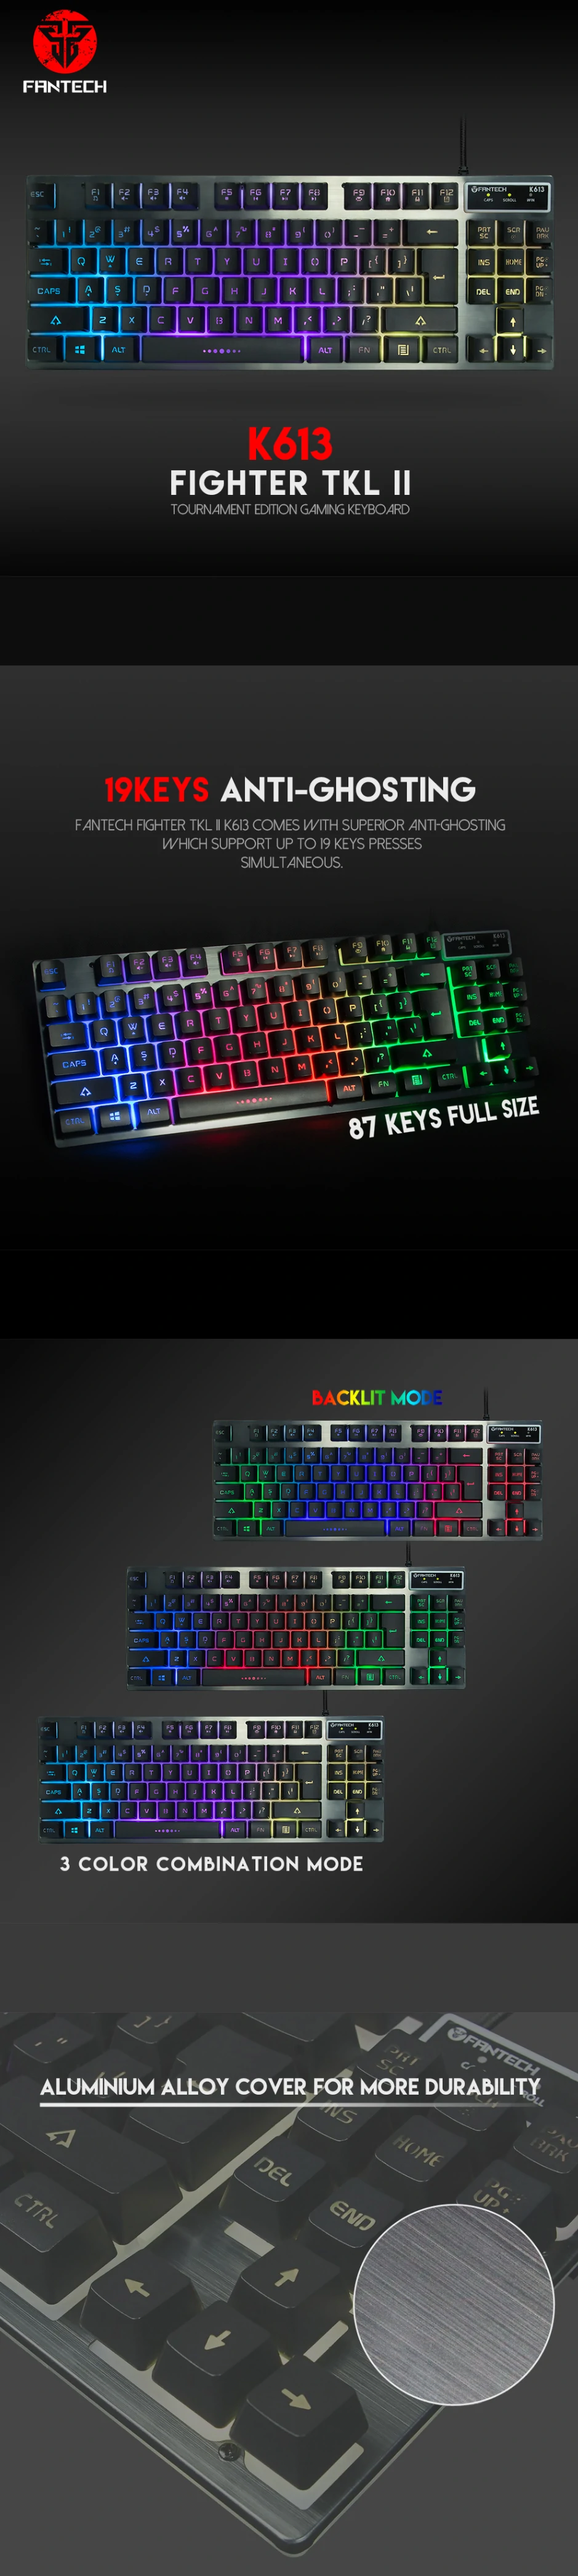 Overview - Fantech - FIGHTER TKL II K613X RGB Gaming Keyboard